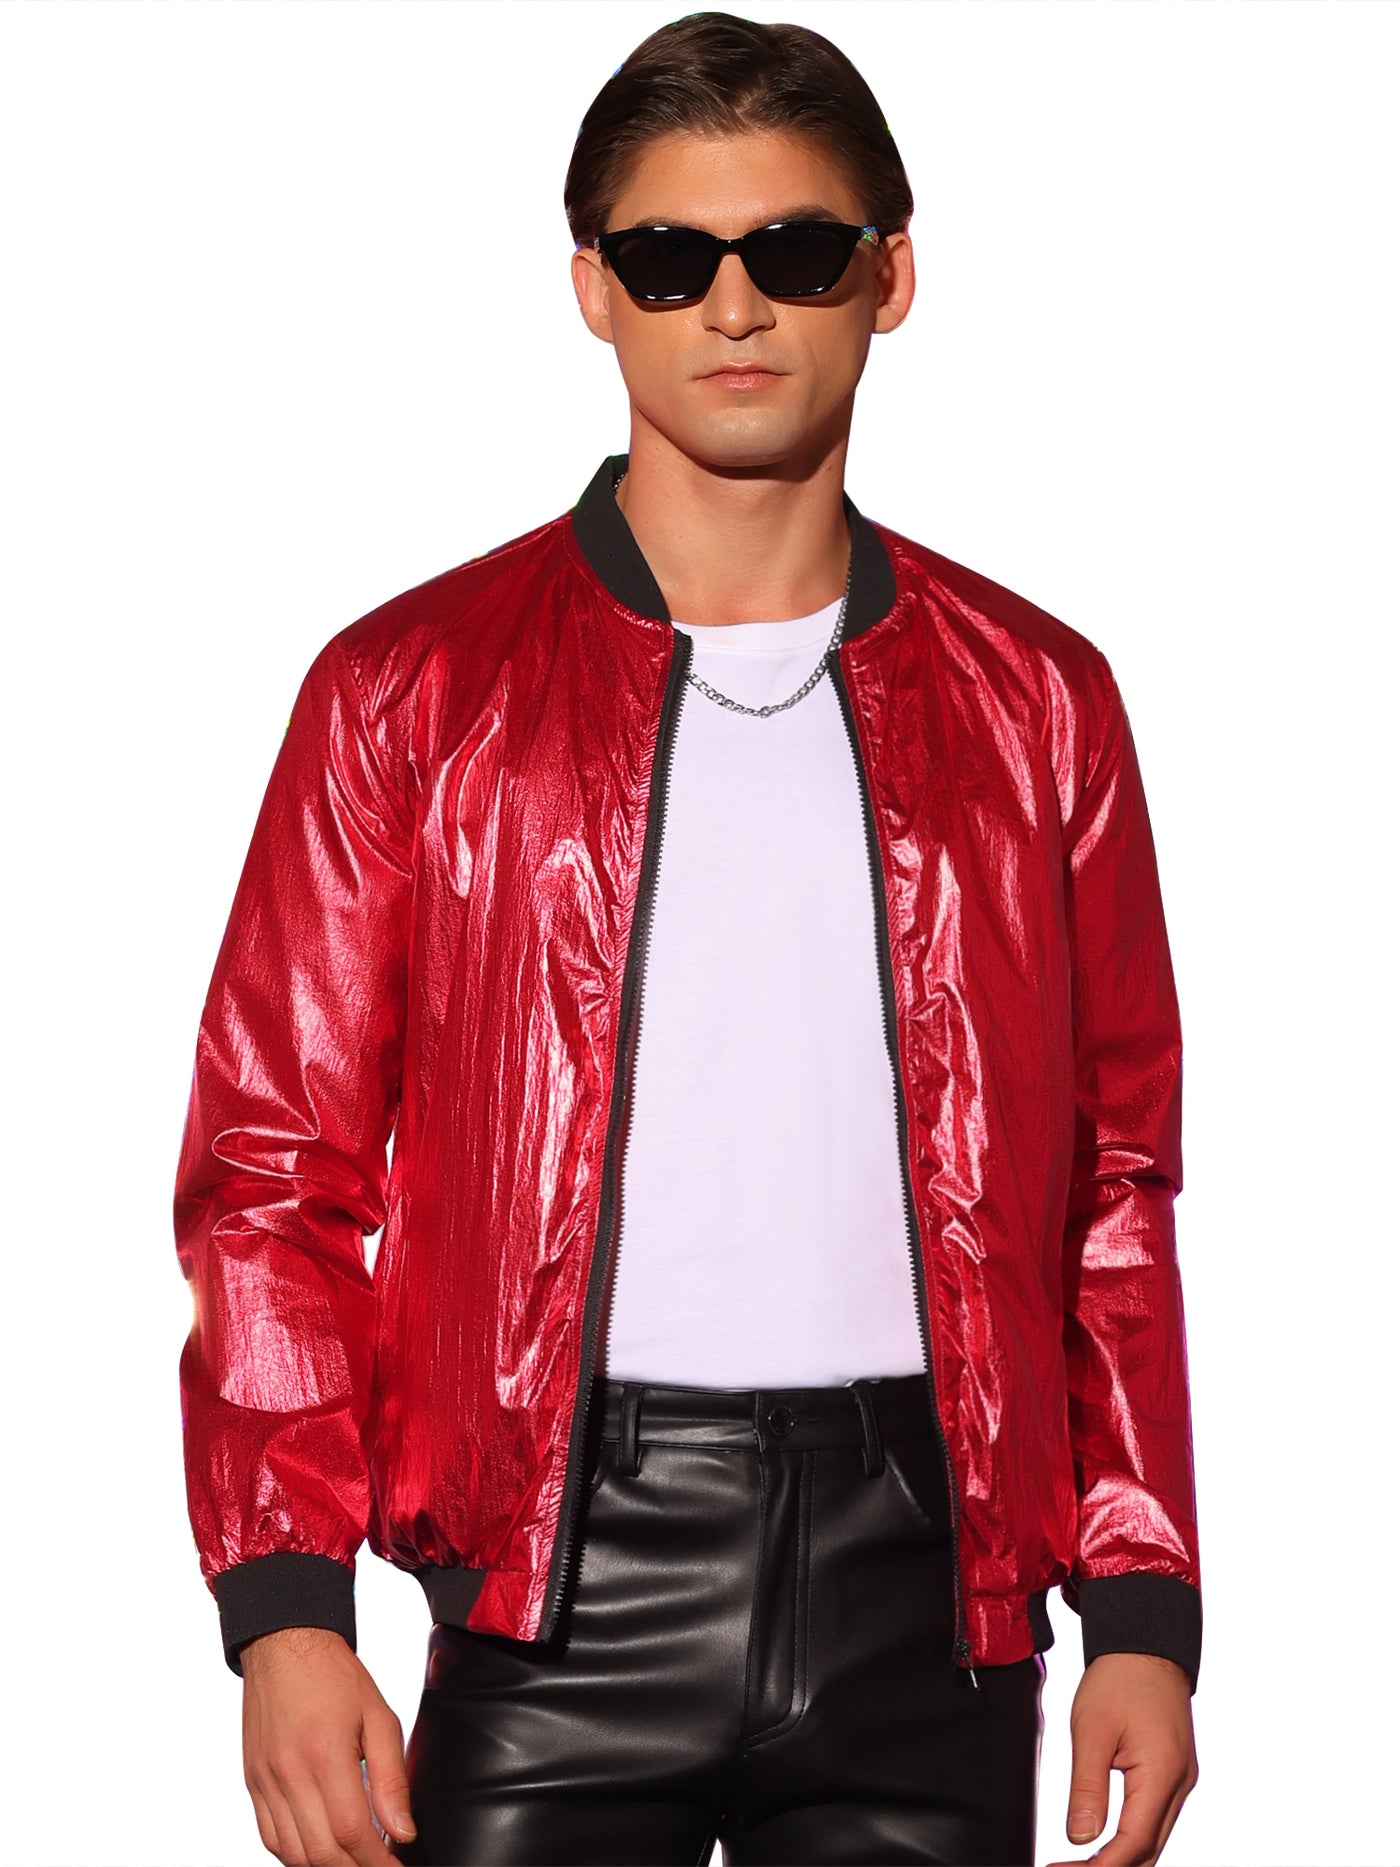 Bublédon Metallic Jacket for Men's Zipper Up Shiny Party Holographic Bomber Varsity Jackets